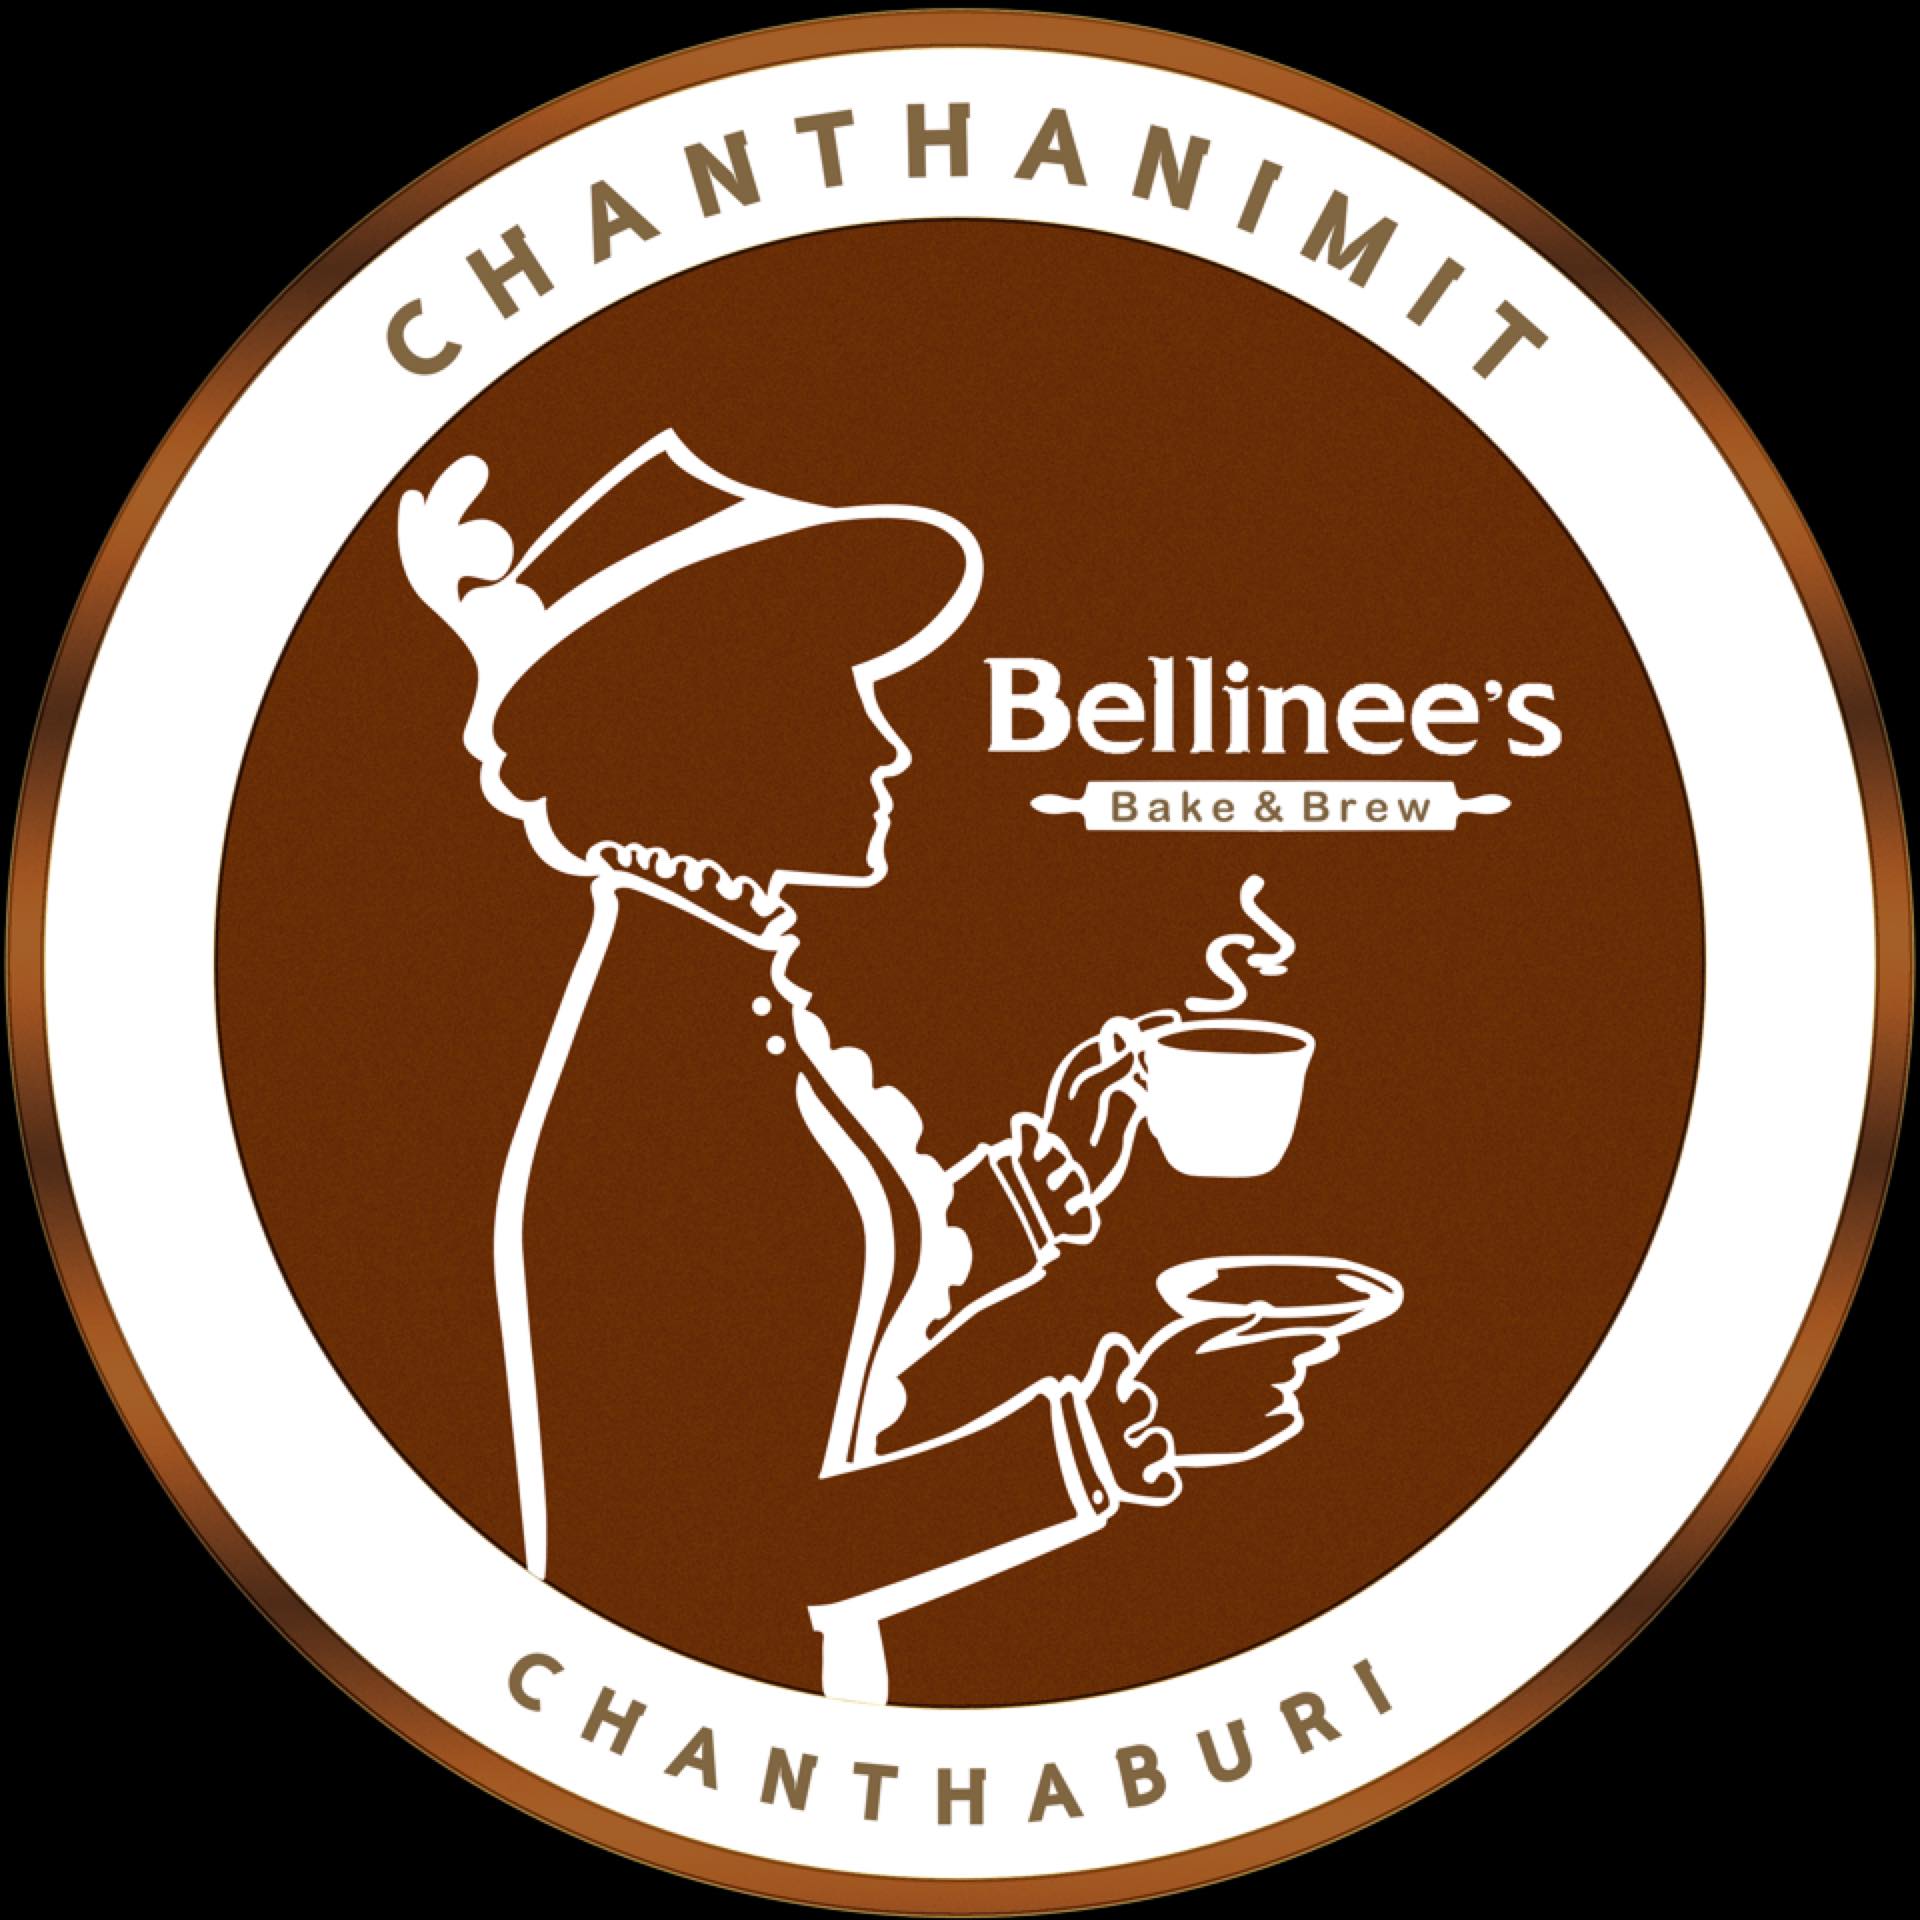 Bellinee s Chanthanimit Chanthaburi เบลลินี่ เบคแอนด์บรูว์ จันทนิมิต